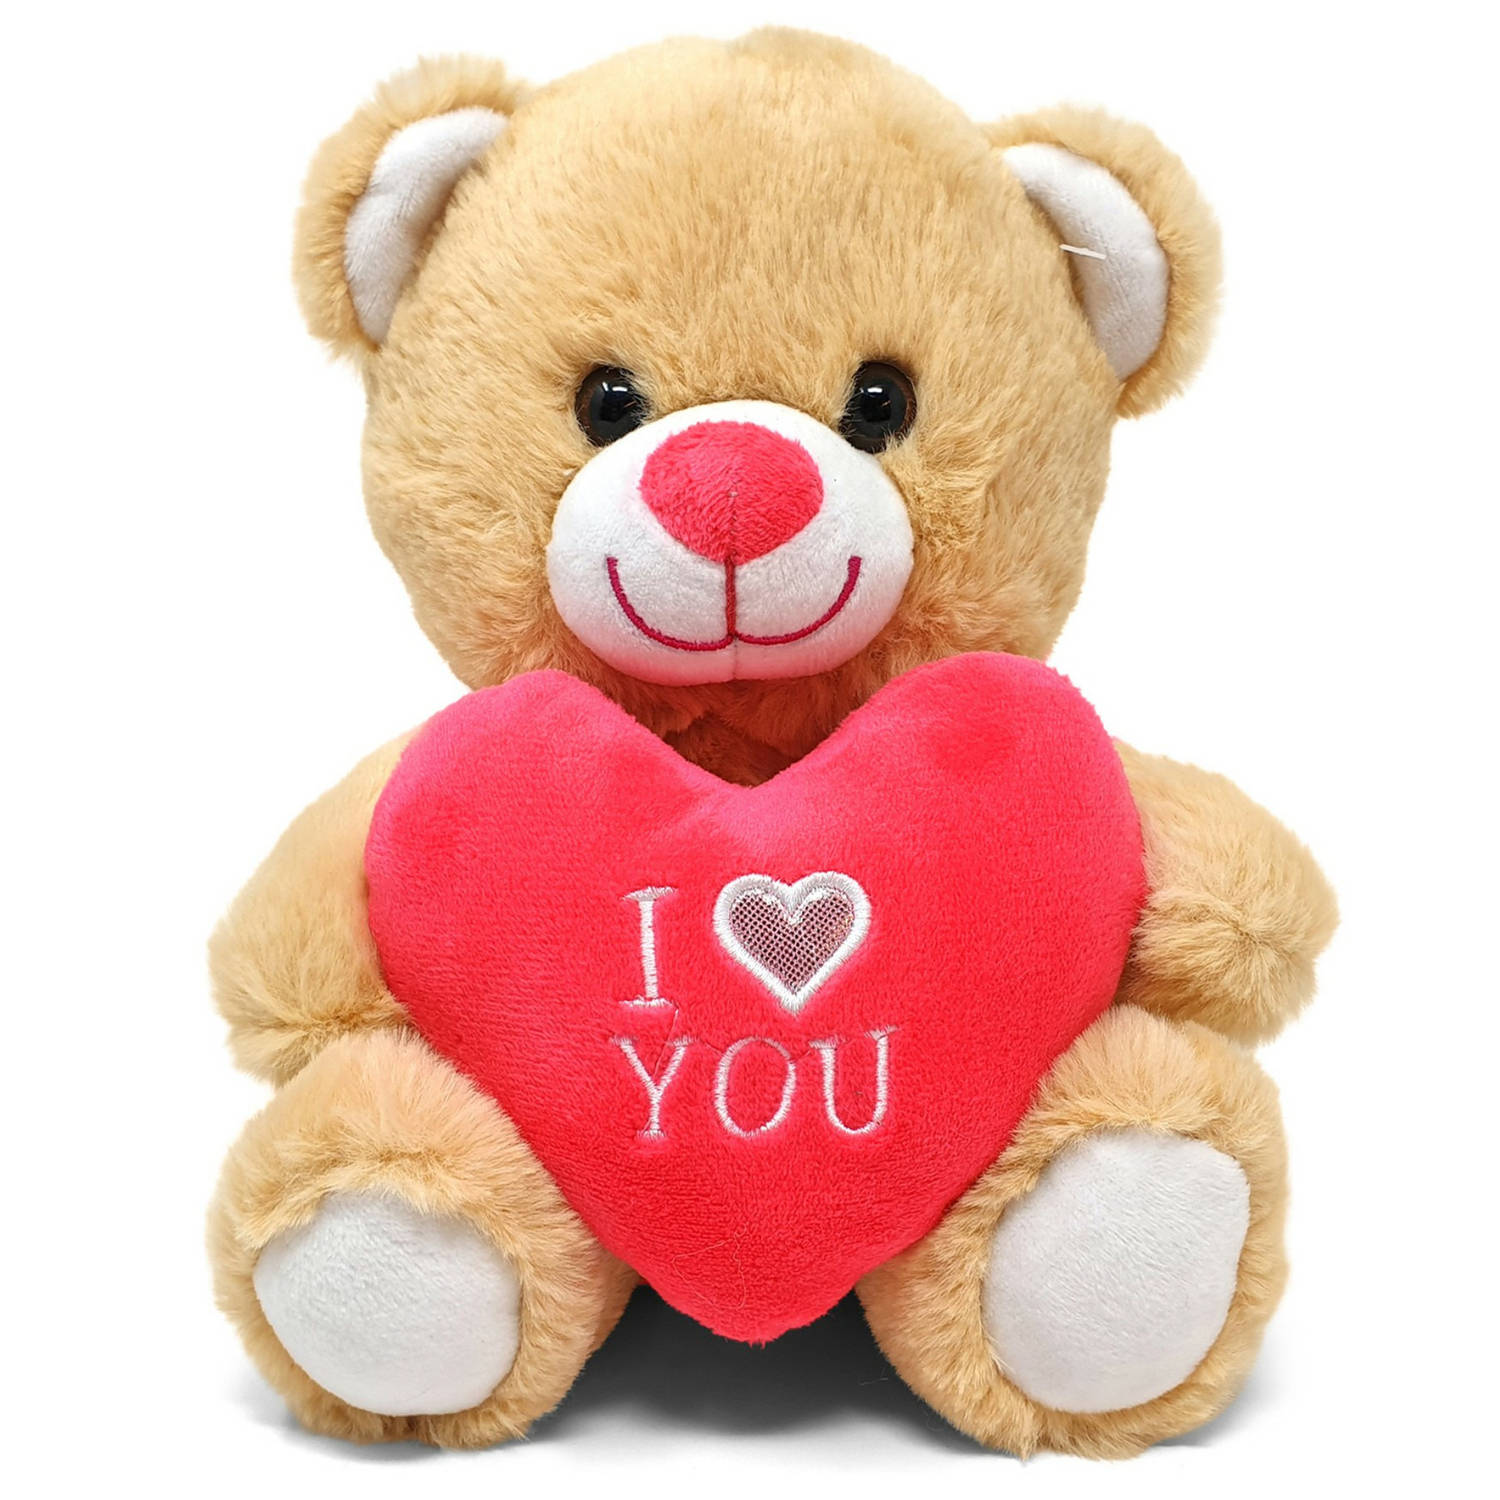 Scharnier rand riem Licht bruine pluche knuffelbeer 20 cm incl. Valentijnskaart I Love You -  Knuffelberen | Blokker